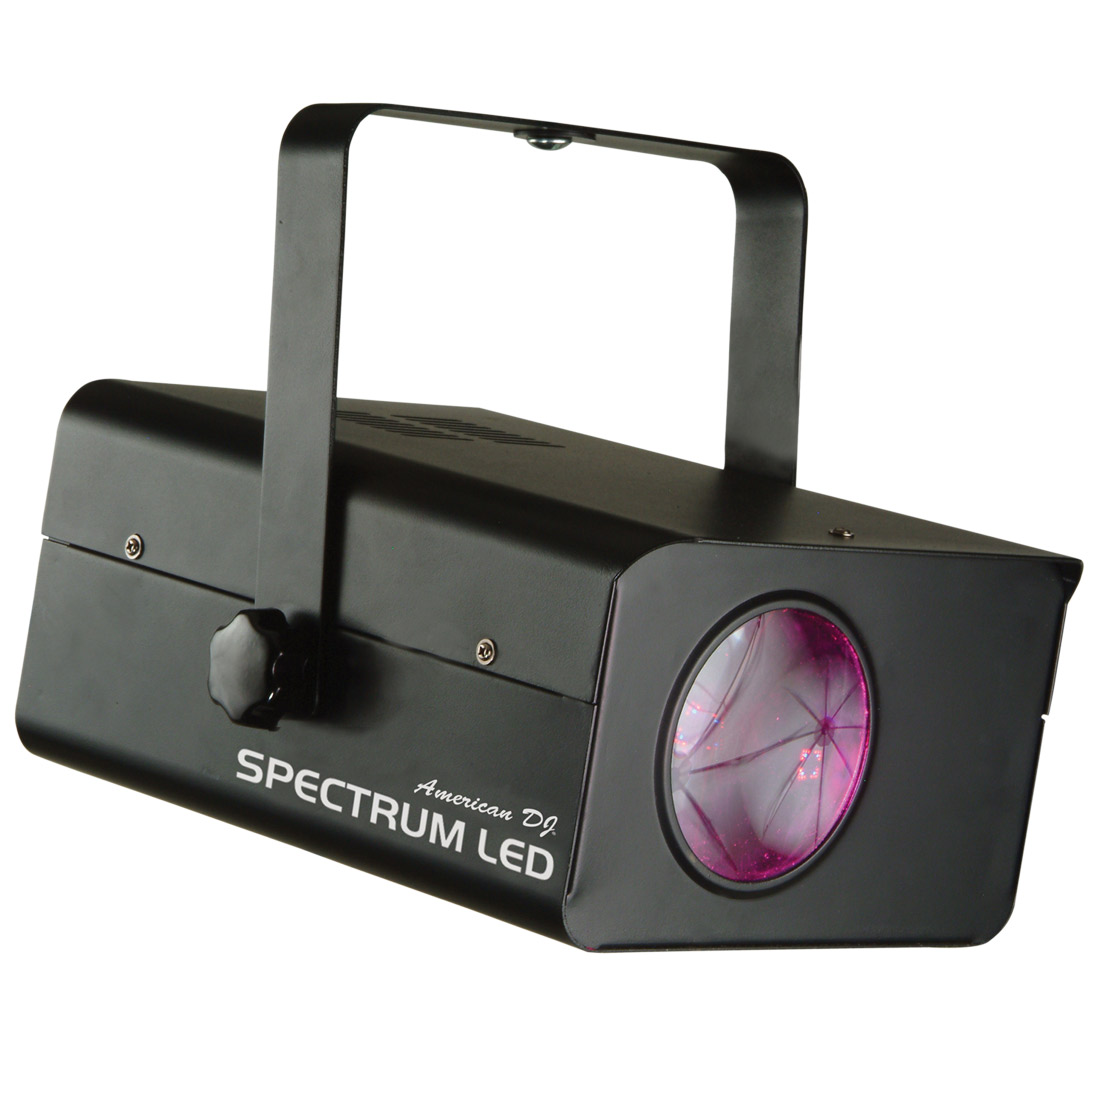 Spectrum FX2 - LED effect DMX